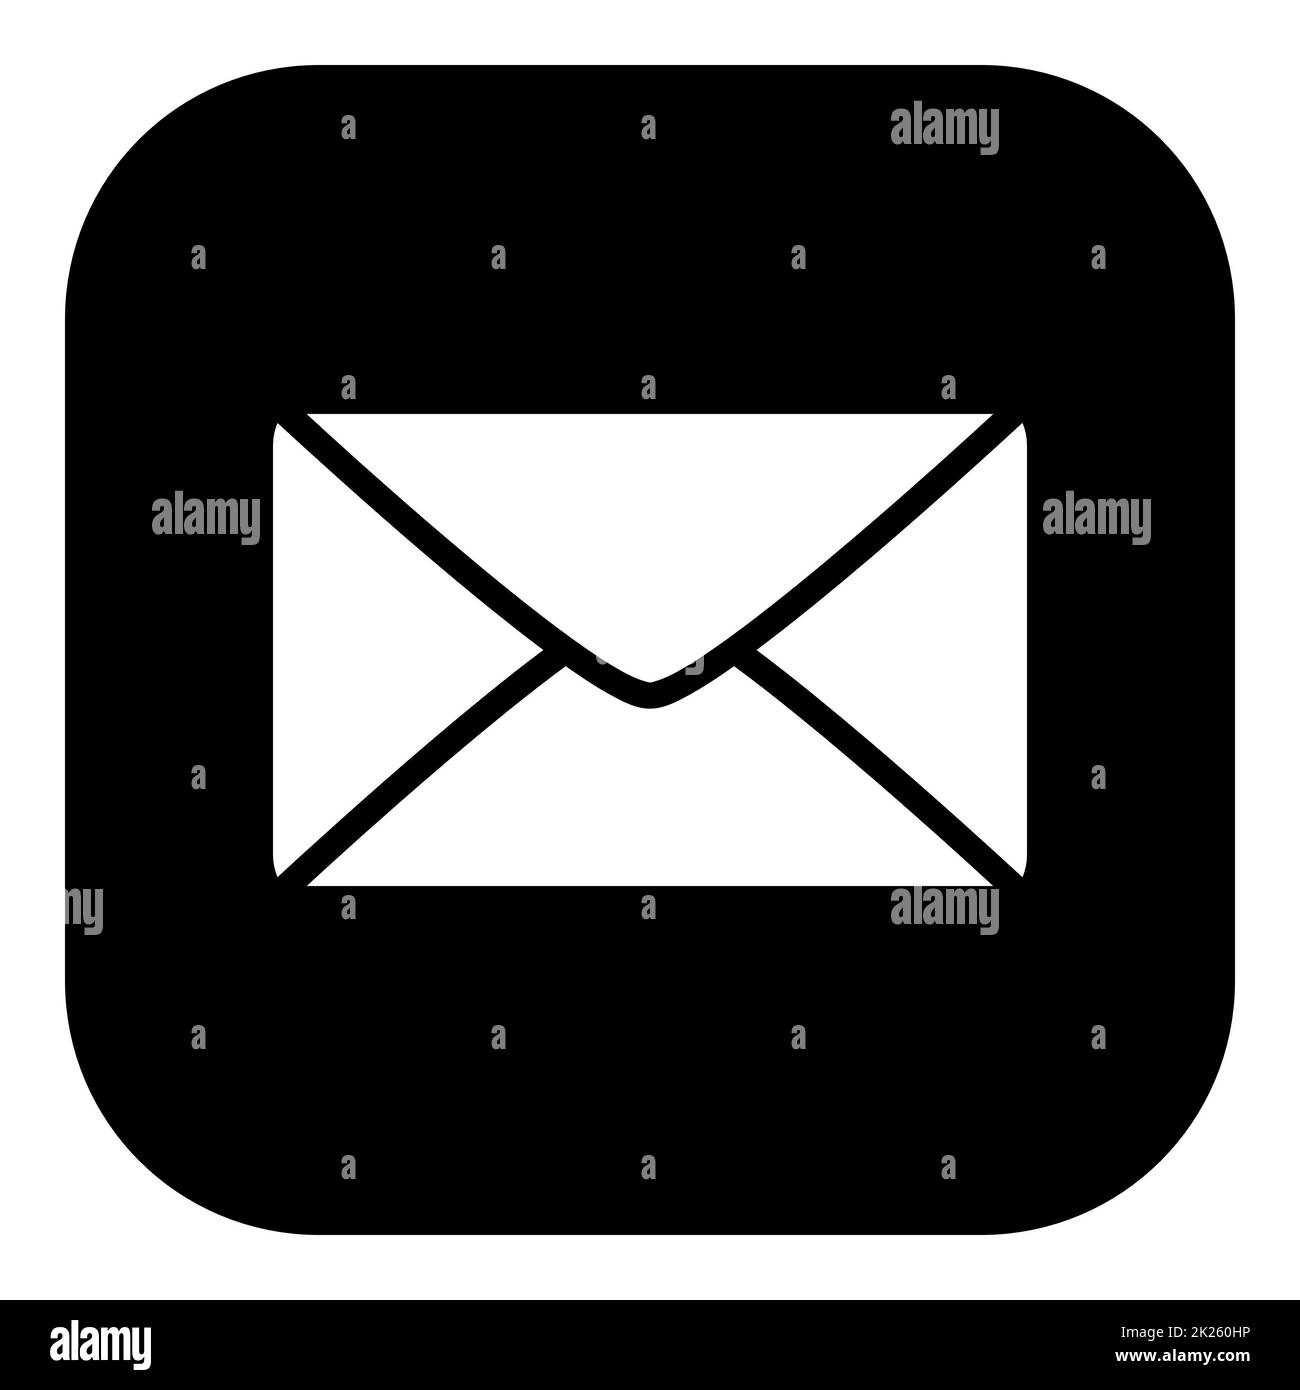 Envelope and app icon Stock Photo